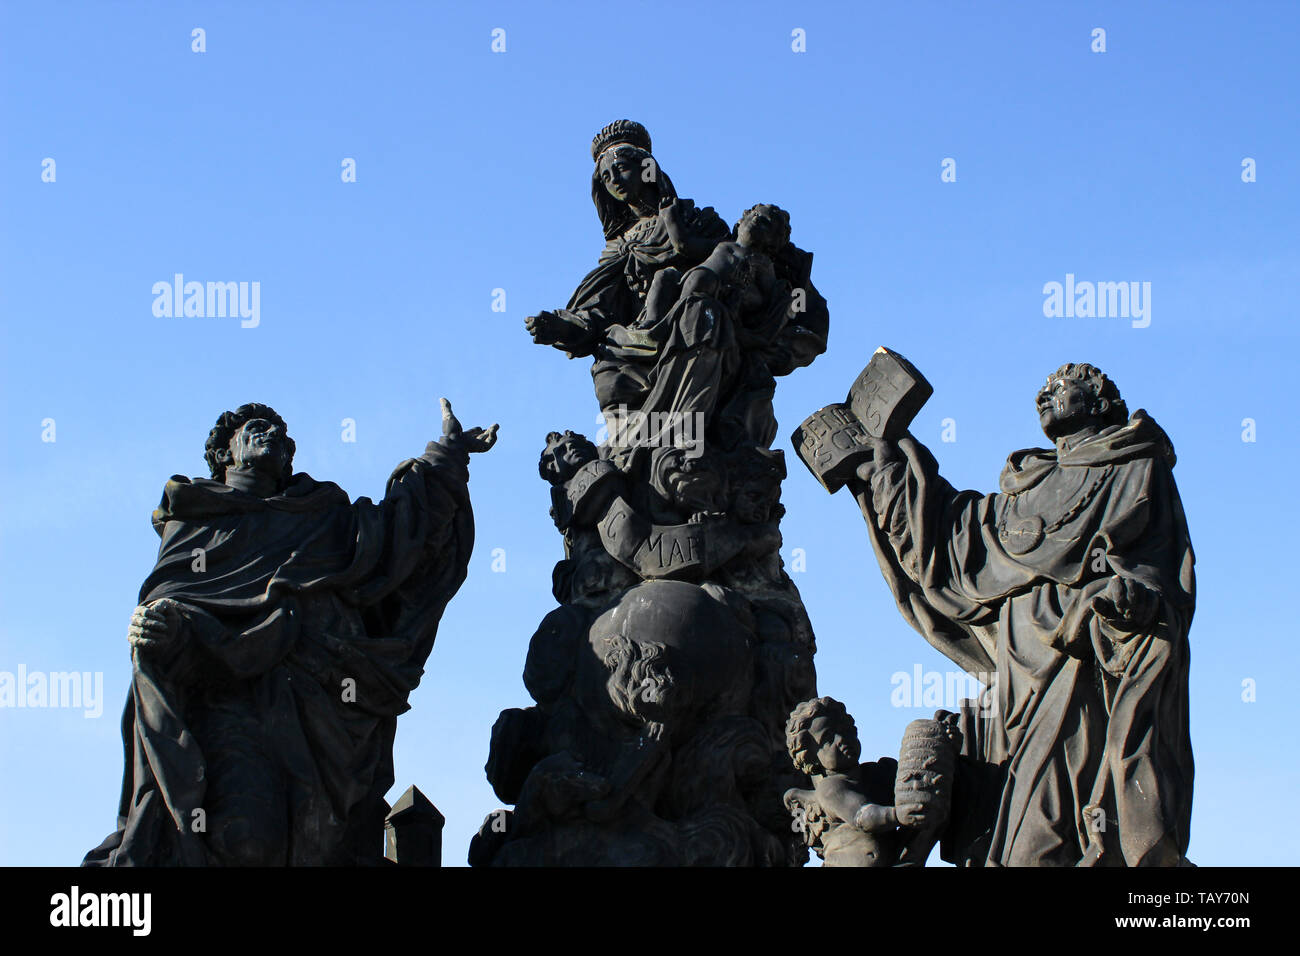 Statue of the Madonna attending to St. Bernard on Charles Bridge in Prague, Czech Republic Stock Photo